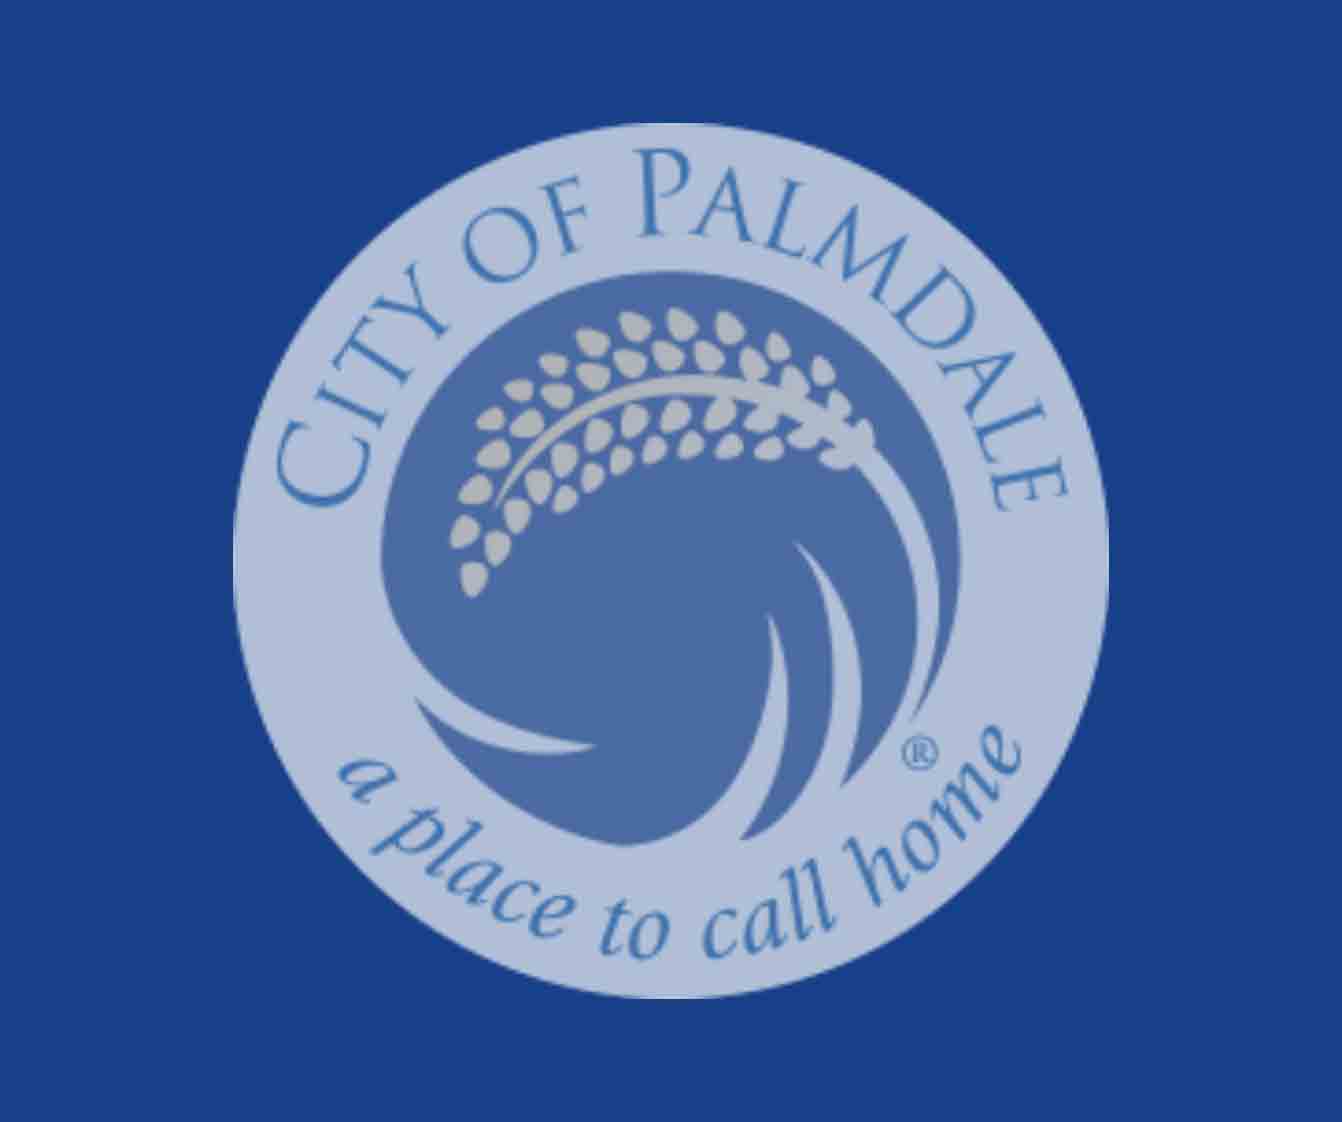 The City of Palmdale Logo.